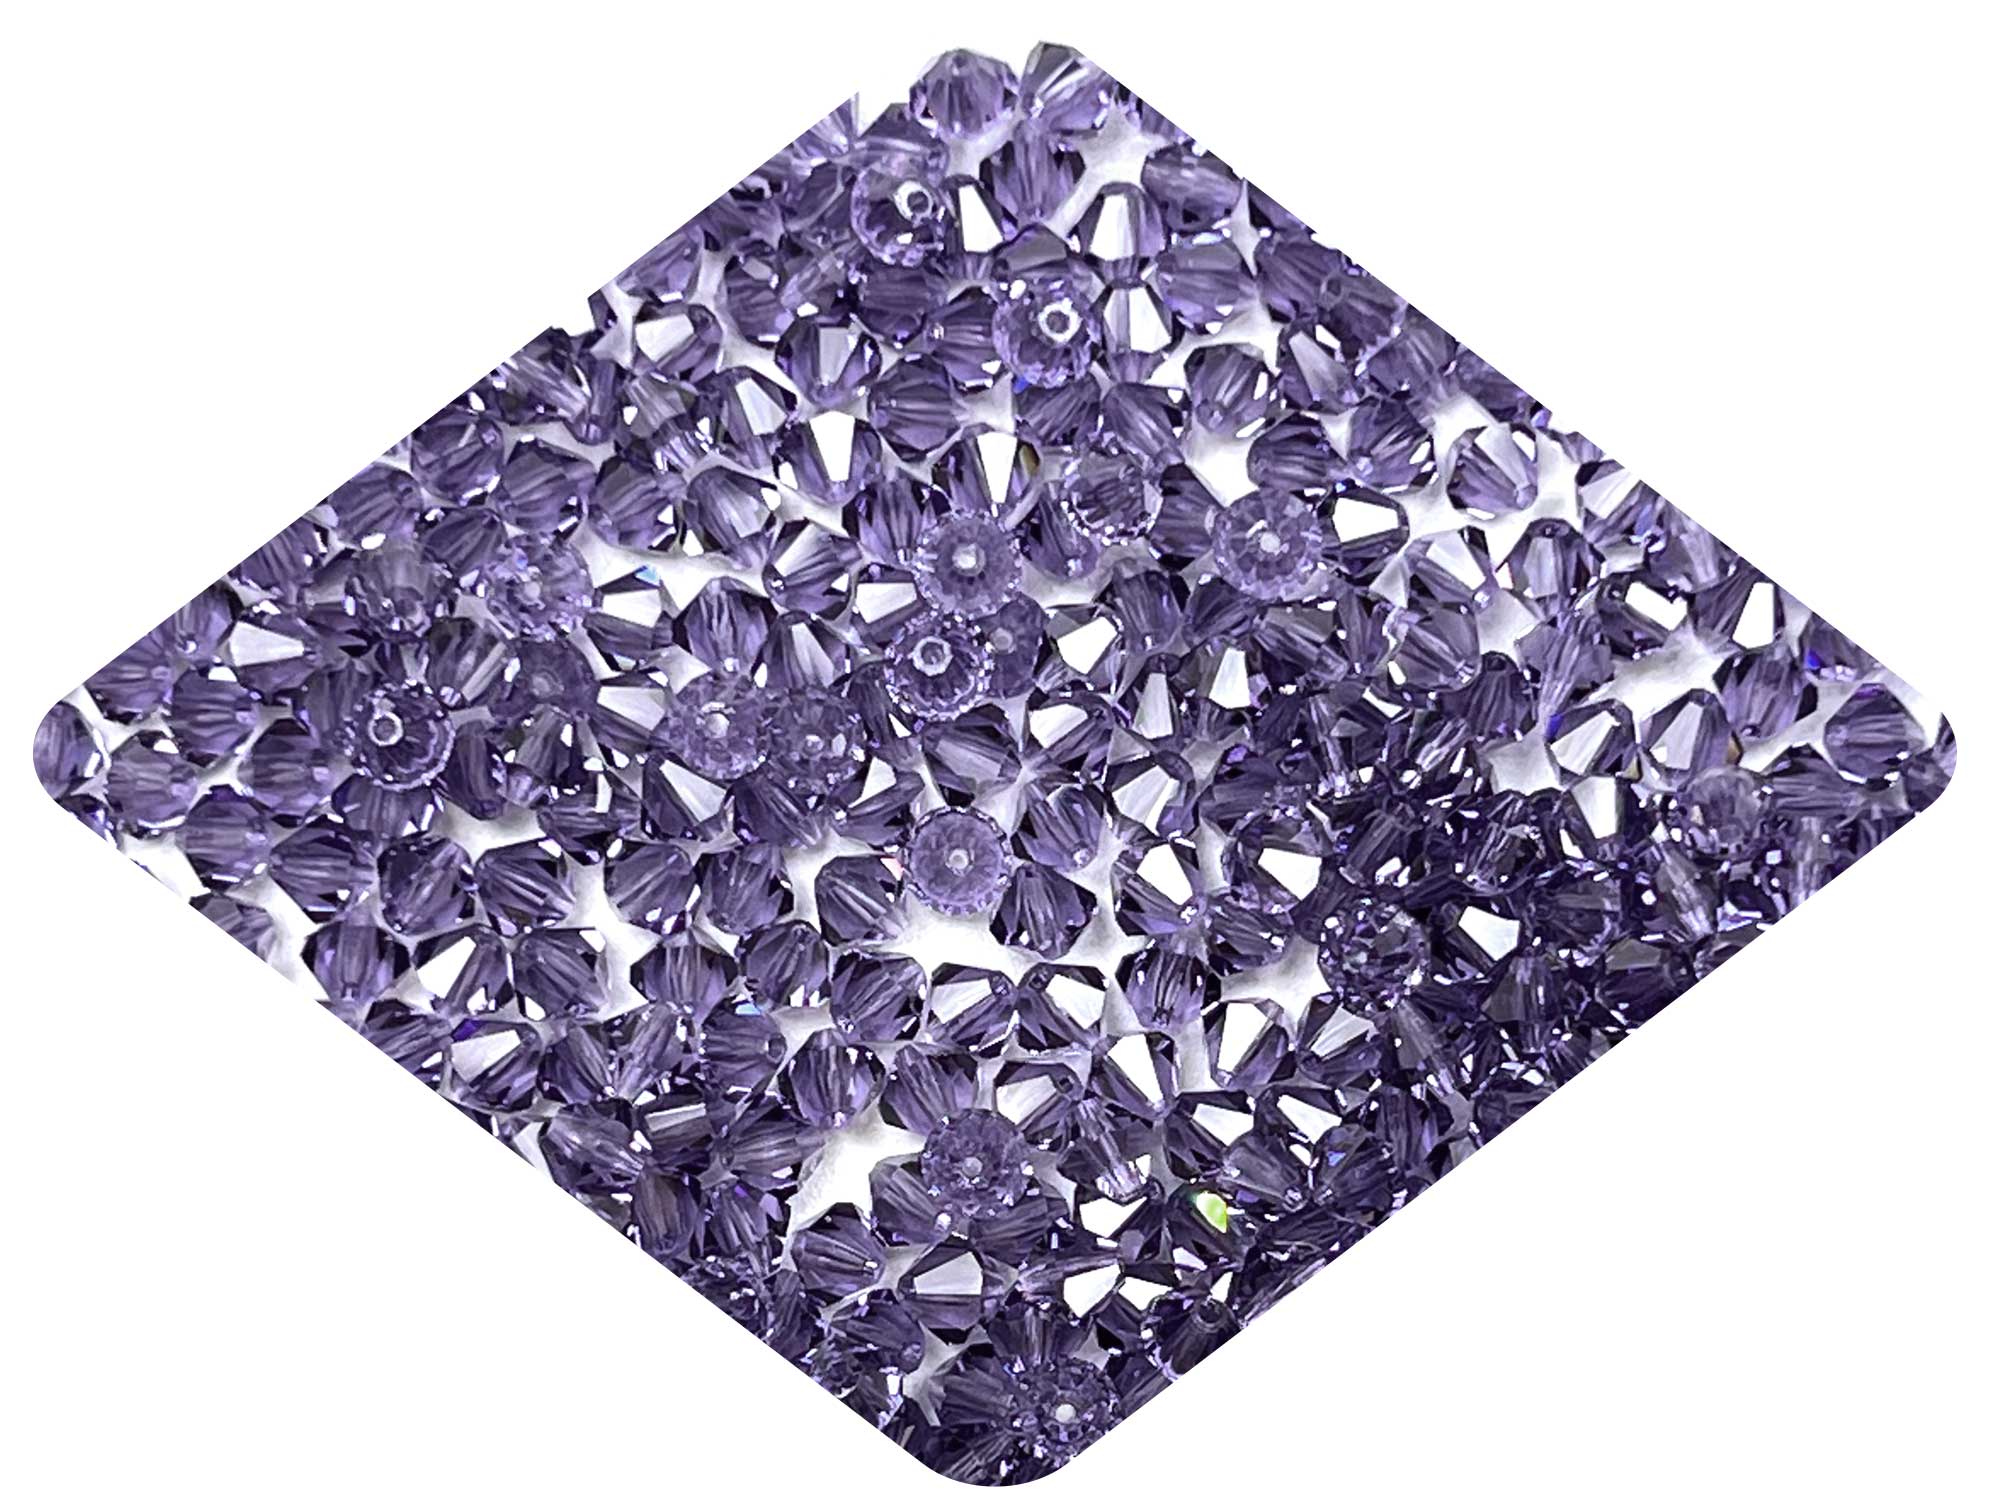 Tanzanite Preciosa Czech Glass Beads Machine Cut Bicones (MC Rondell Diamond Shape) purple crystals 3mm 4mm 5mm 6mm 8mm